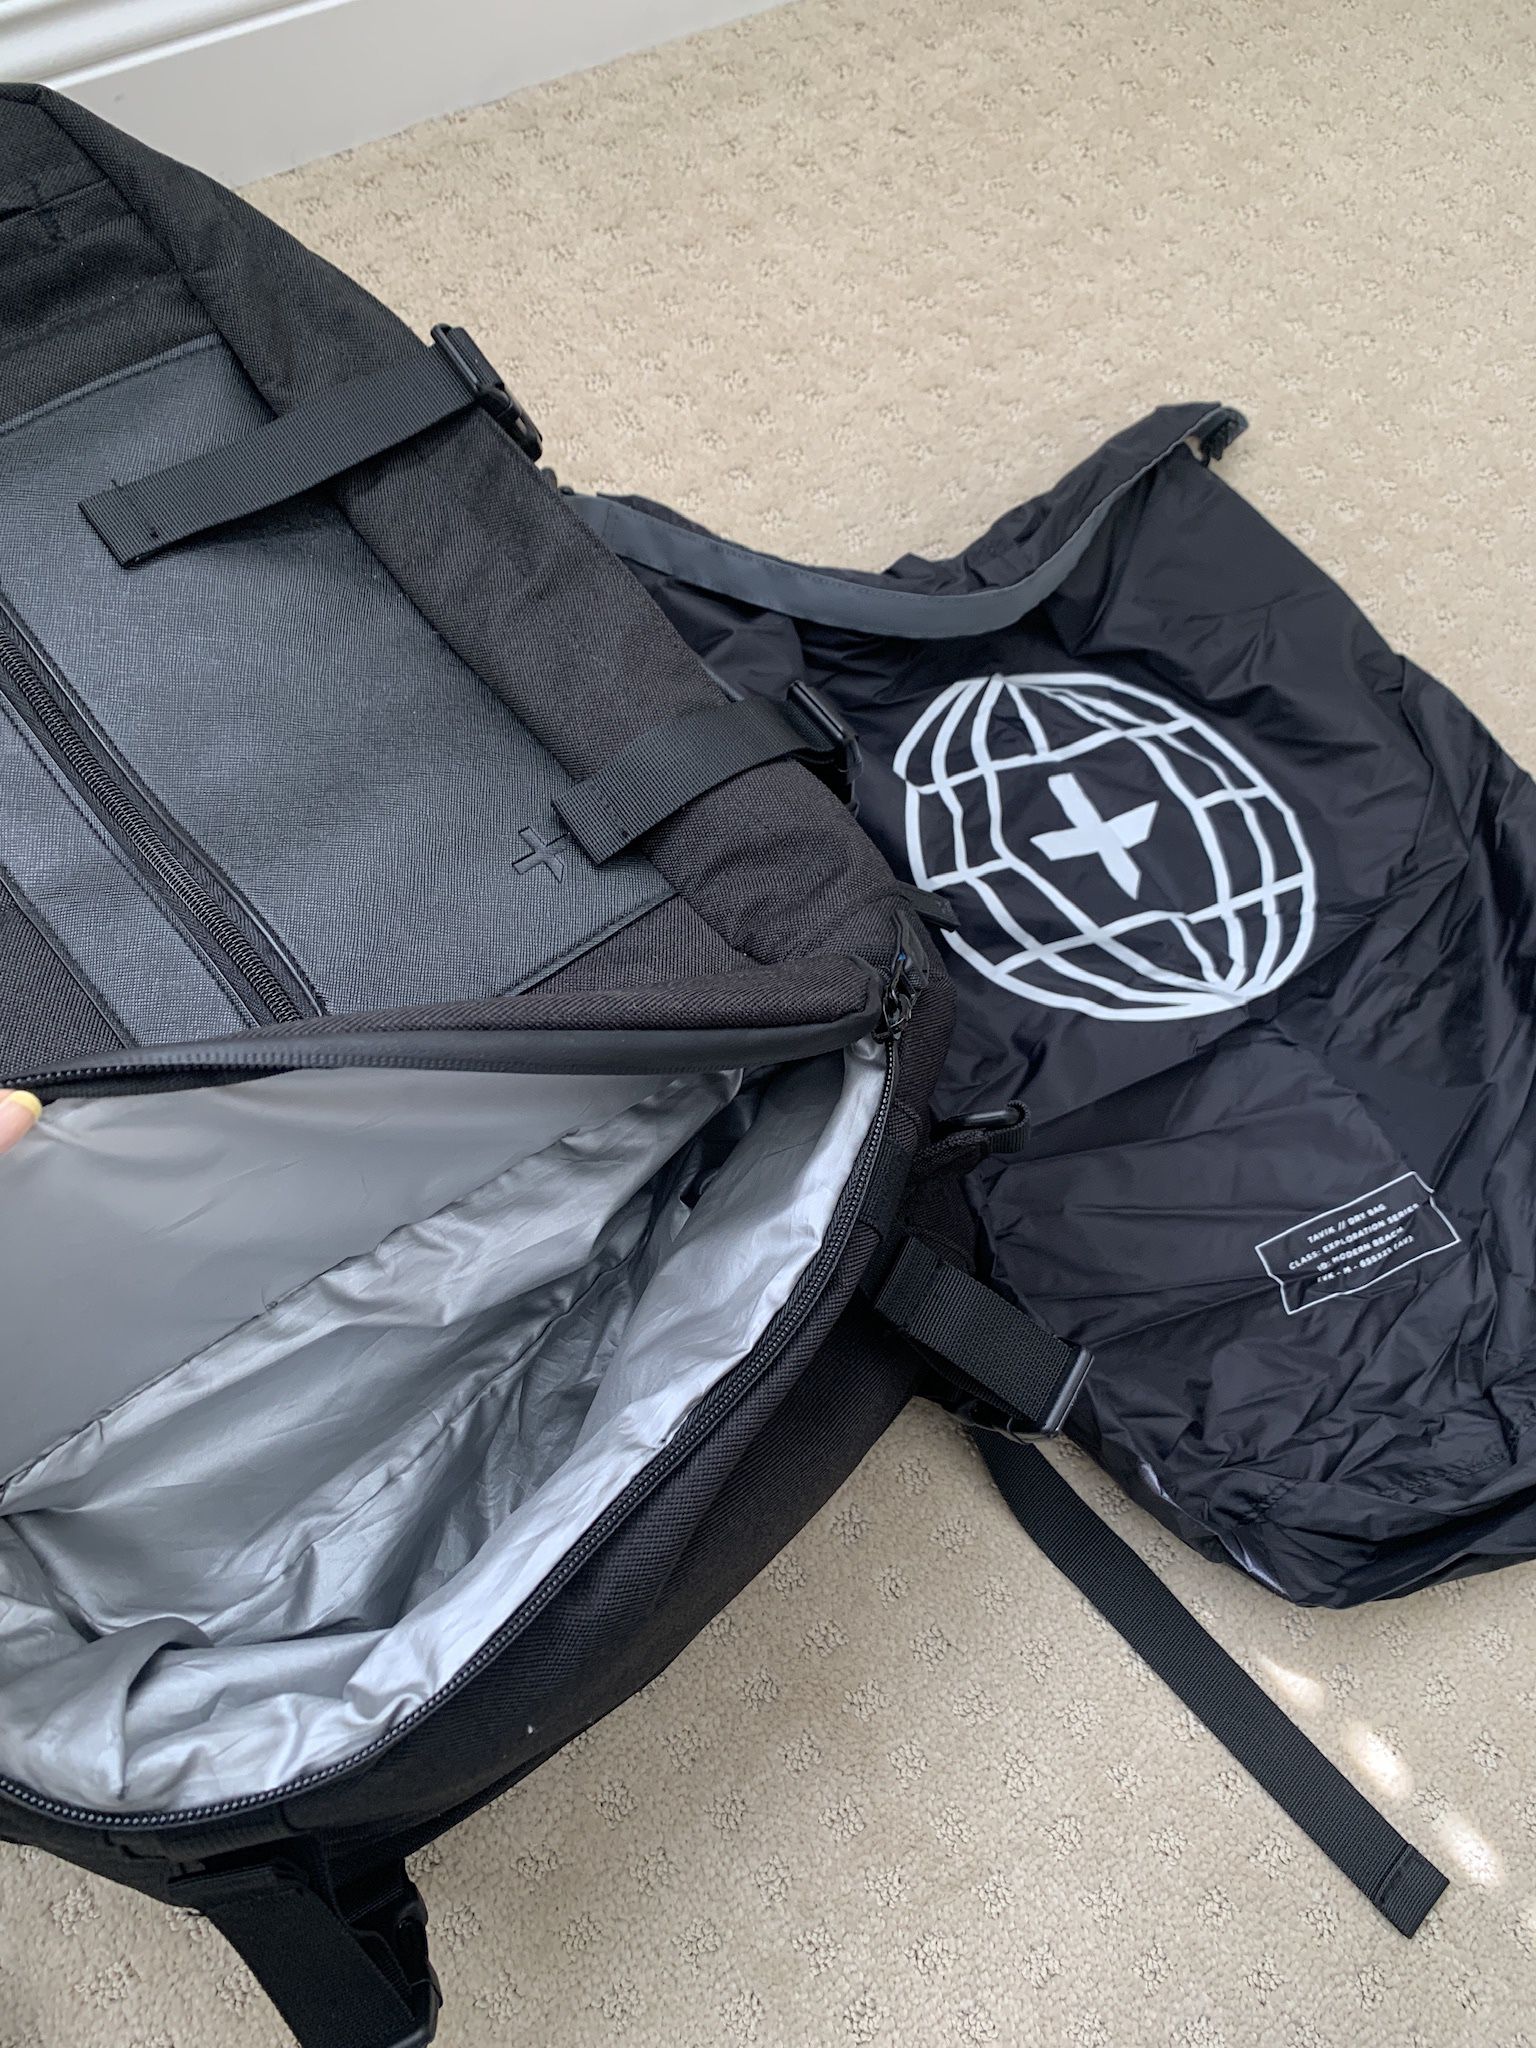 brand new tavik sett travel/hiking black backpack duffle